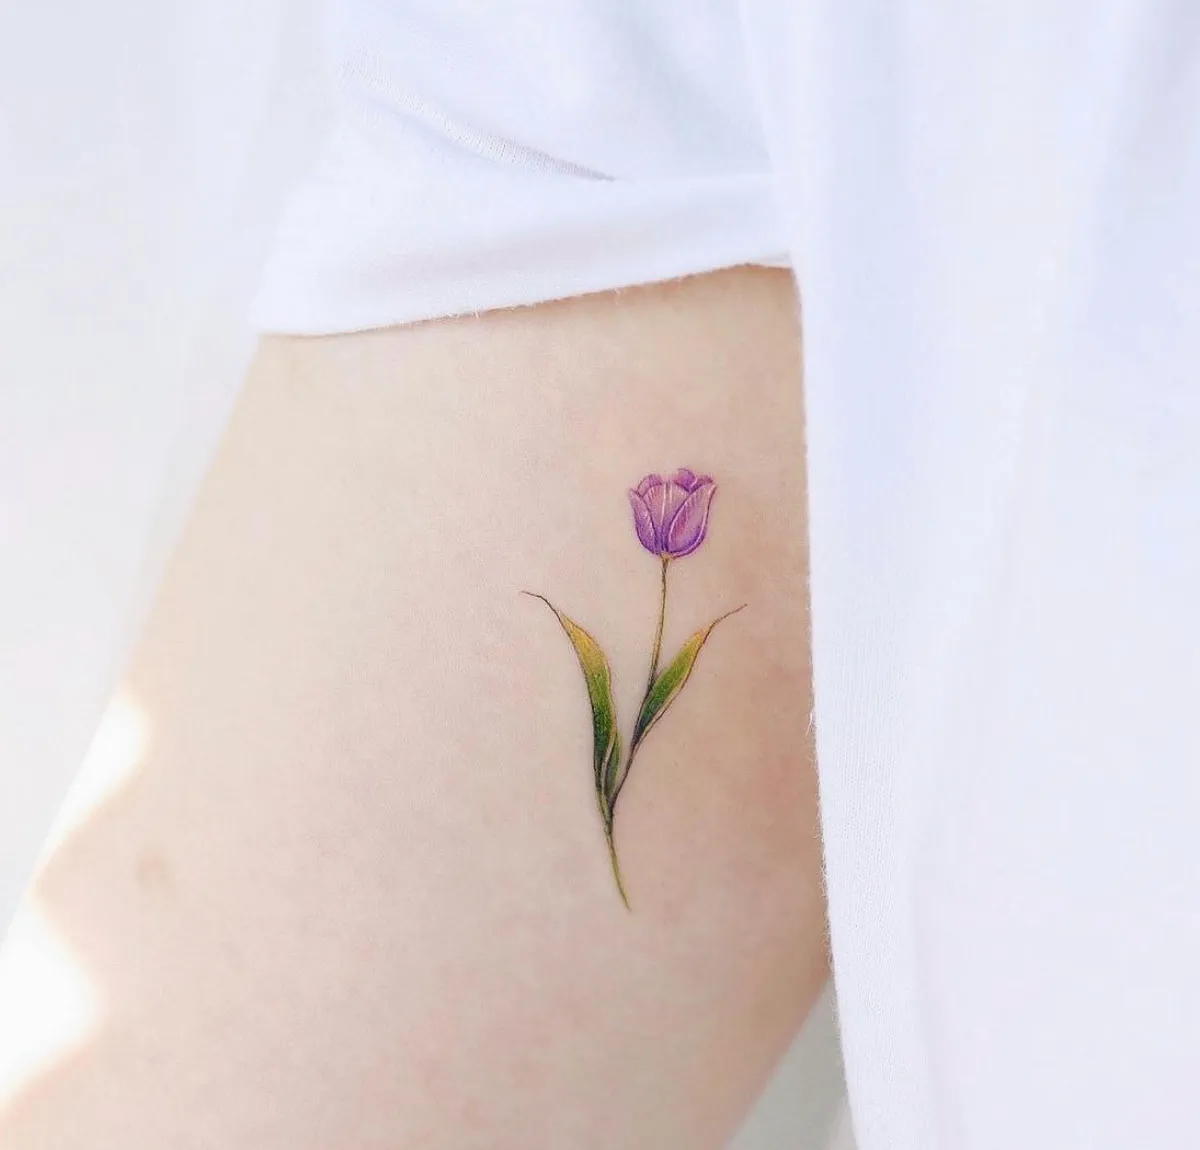 kleines farbiges tattoo violette tulpe